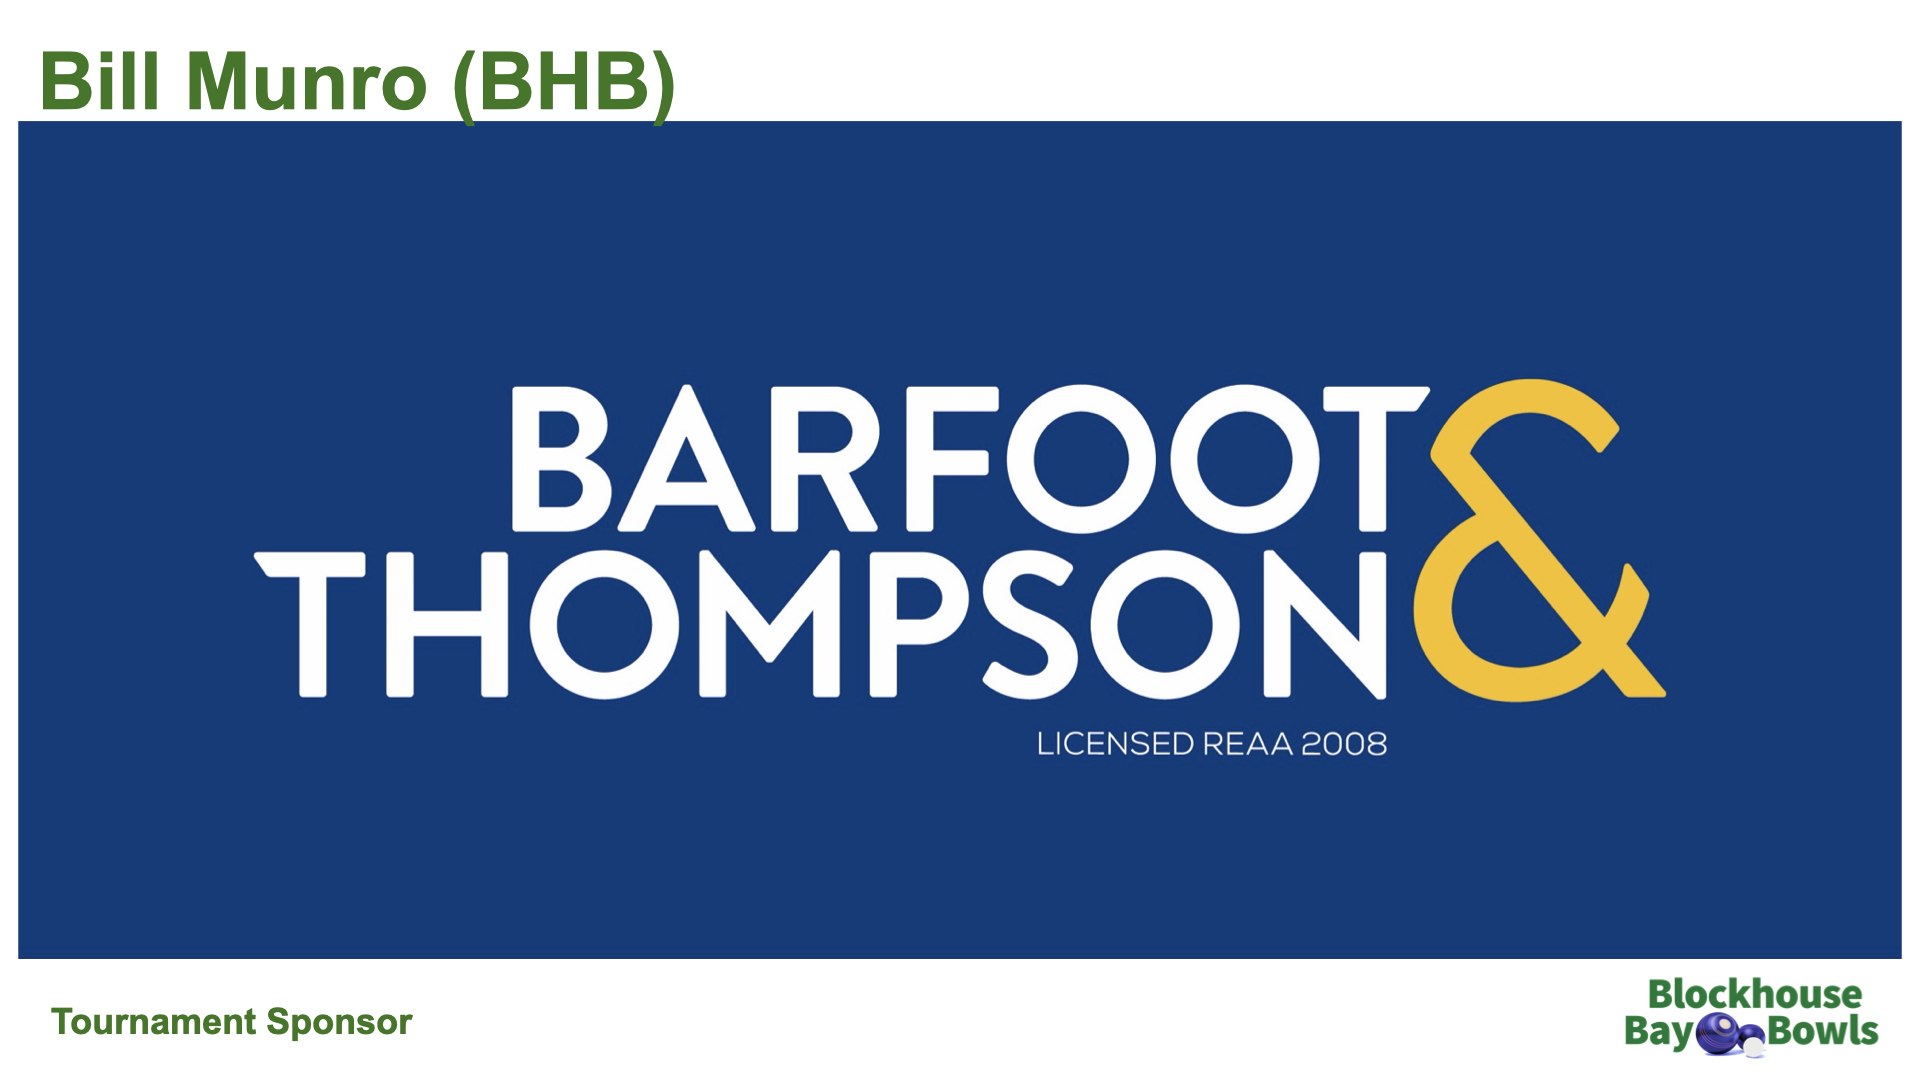 Barfoot & Thompson (BHB)- Bill Munro